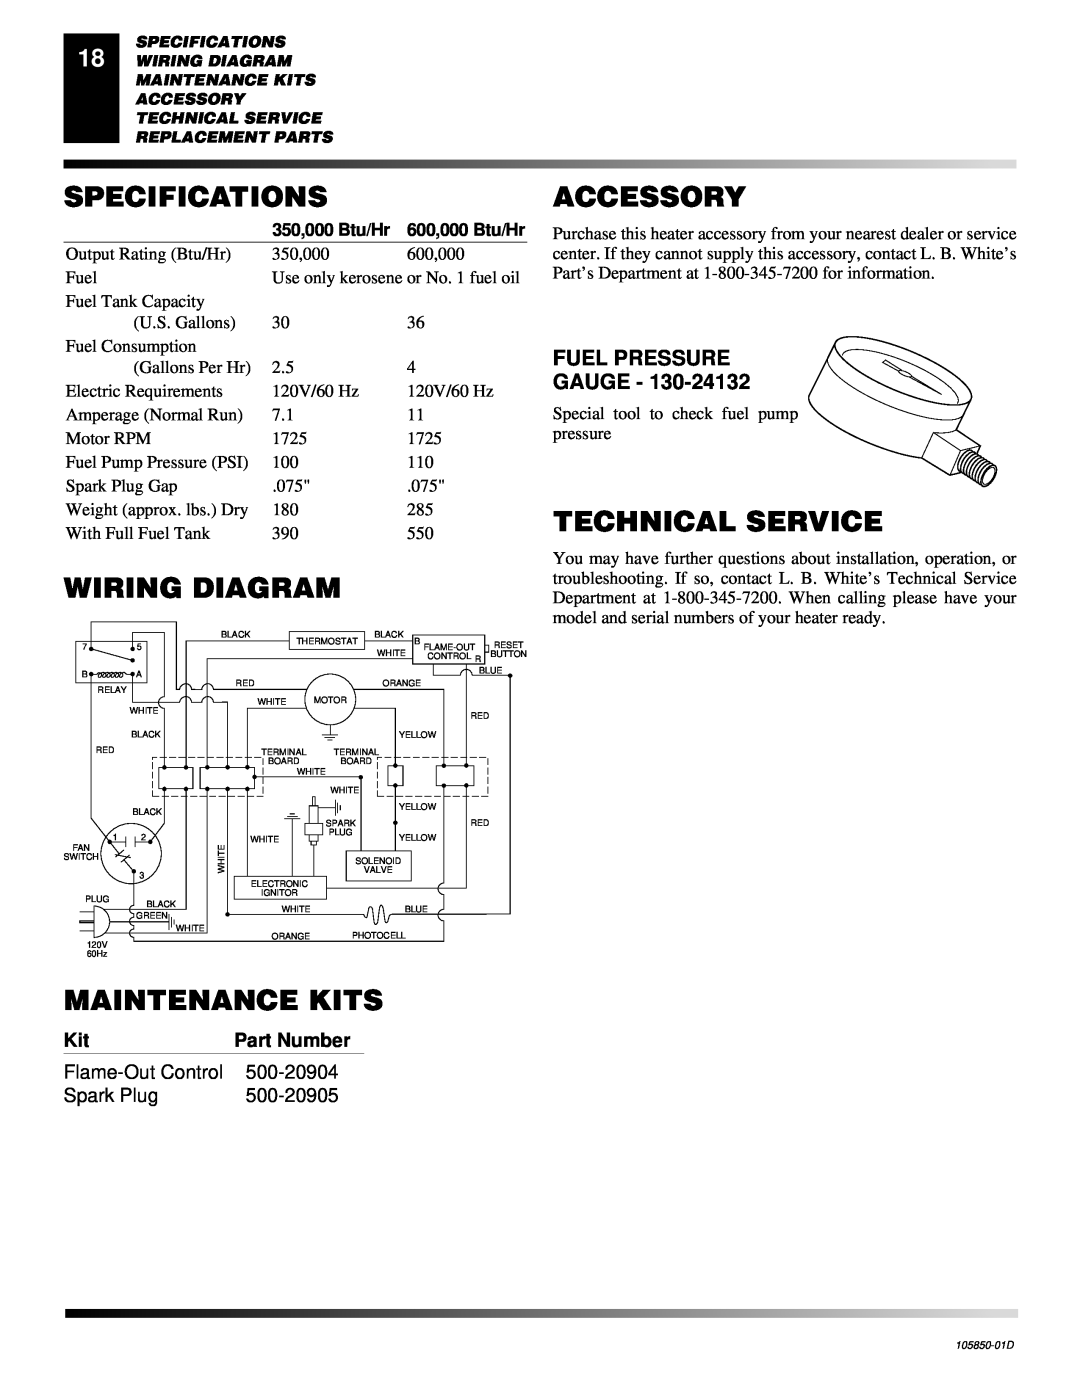 Desa CP600AK, CP350AK Specifications, Wiring Diagram, Maintenance Kits, Accessory, Technical Service, Fuel Pressure Gauge 